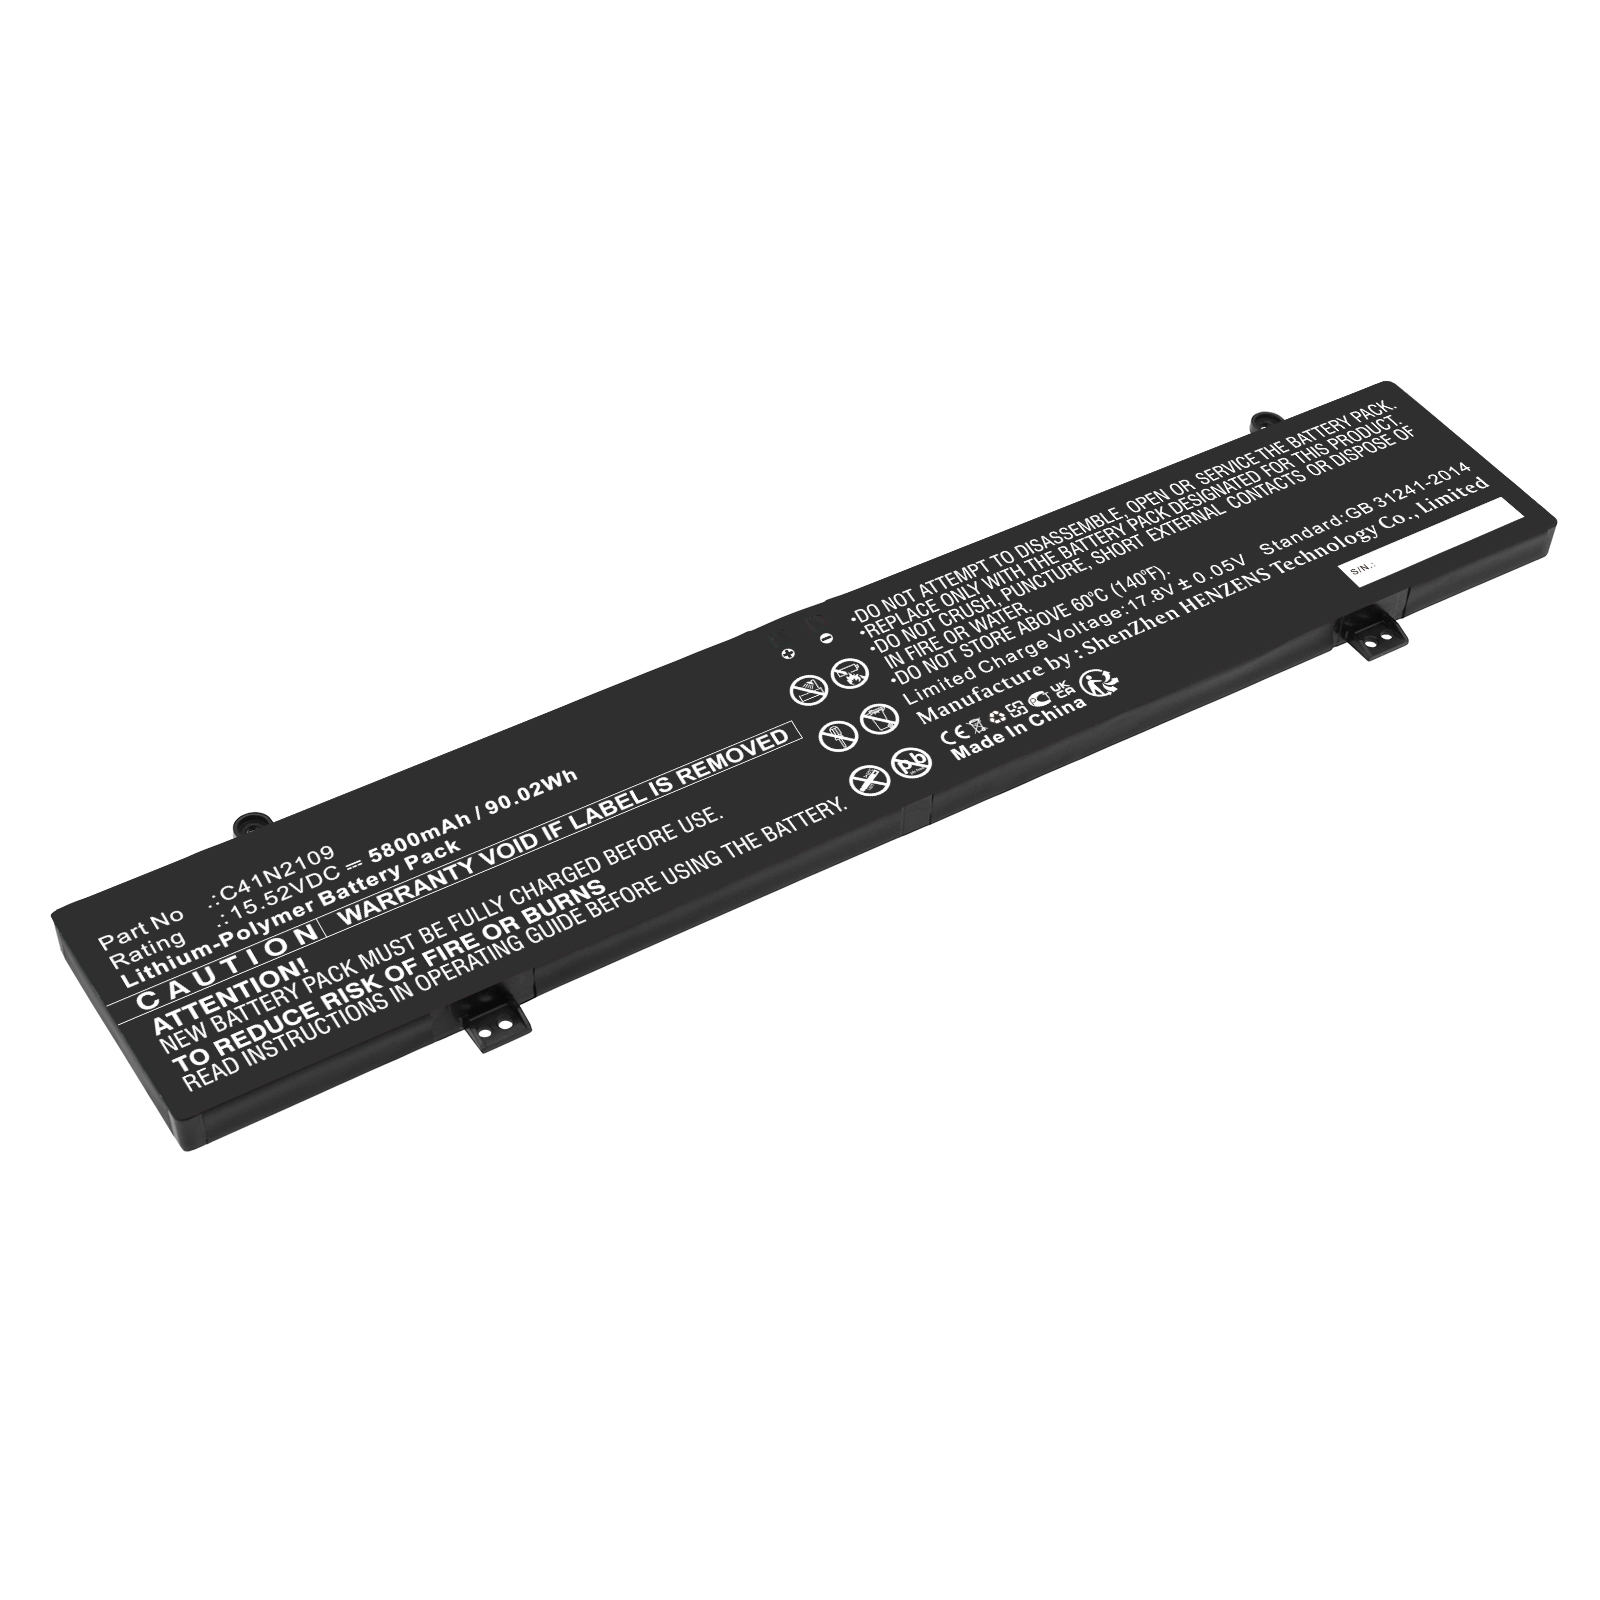 Synergy Digital Laptop Battery, Compatible with Asus C41N2109 Laptop Battery (Li-Pol, 15.2V, 5800mAh)